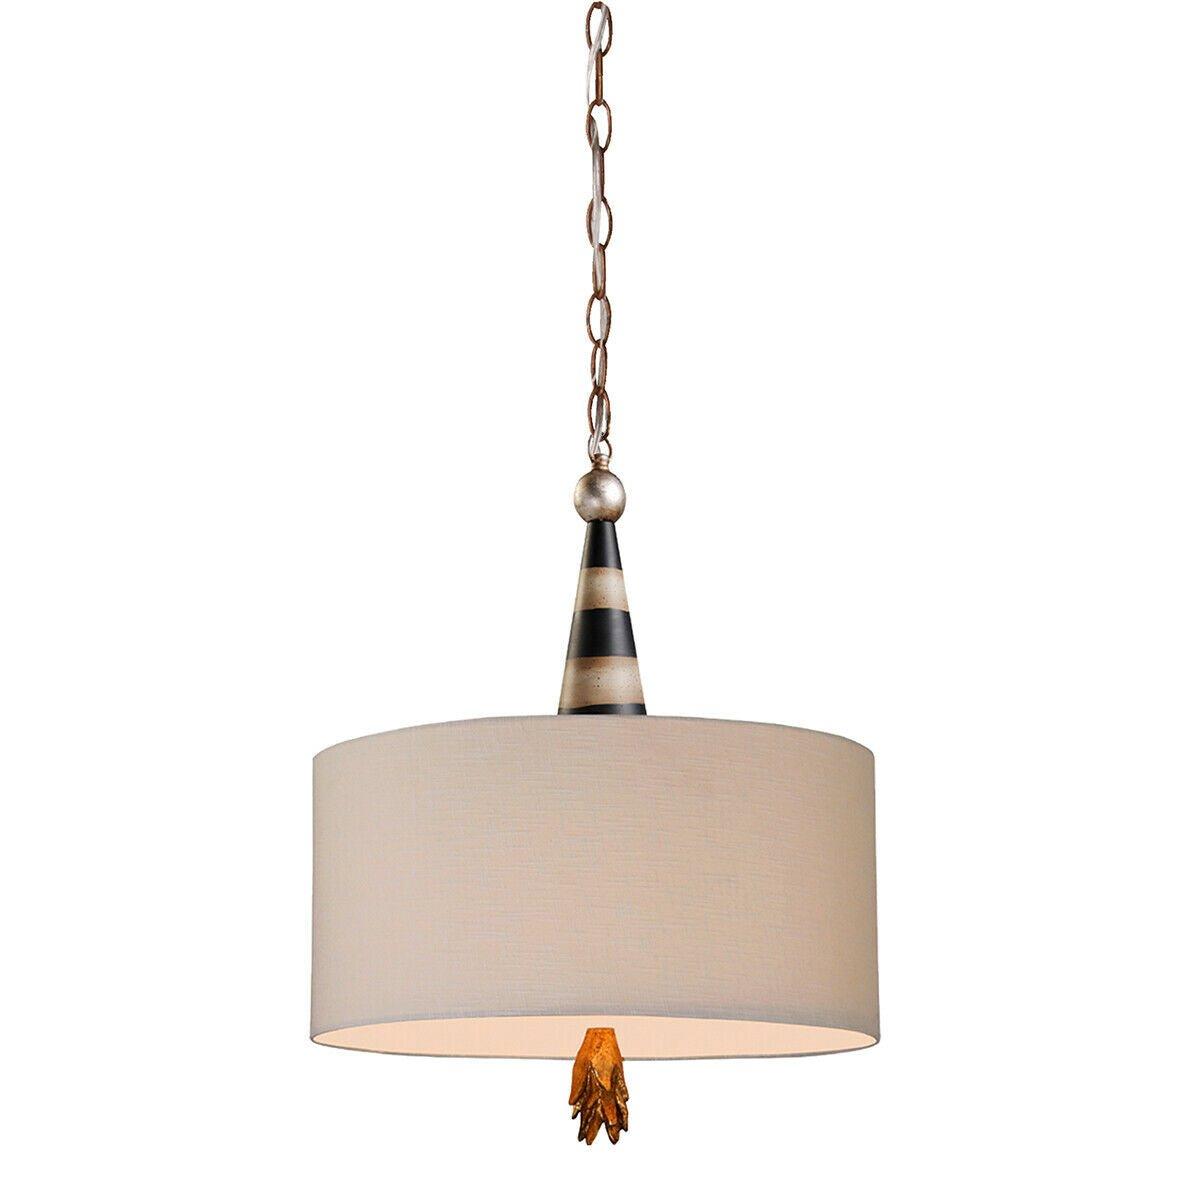 2 Bulb Ceiling Pendant Light Fitting Black Cream And Gold Leaf LED E27 60W